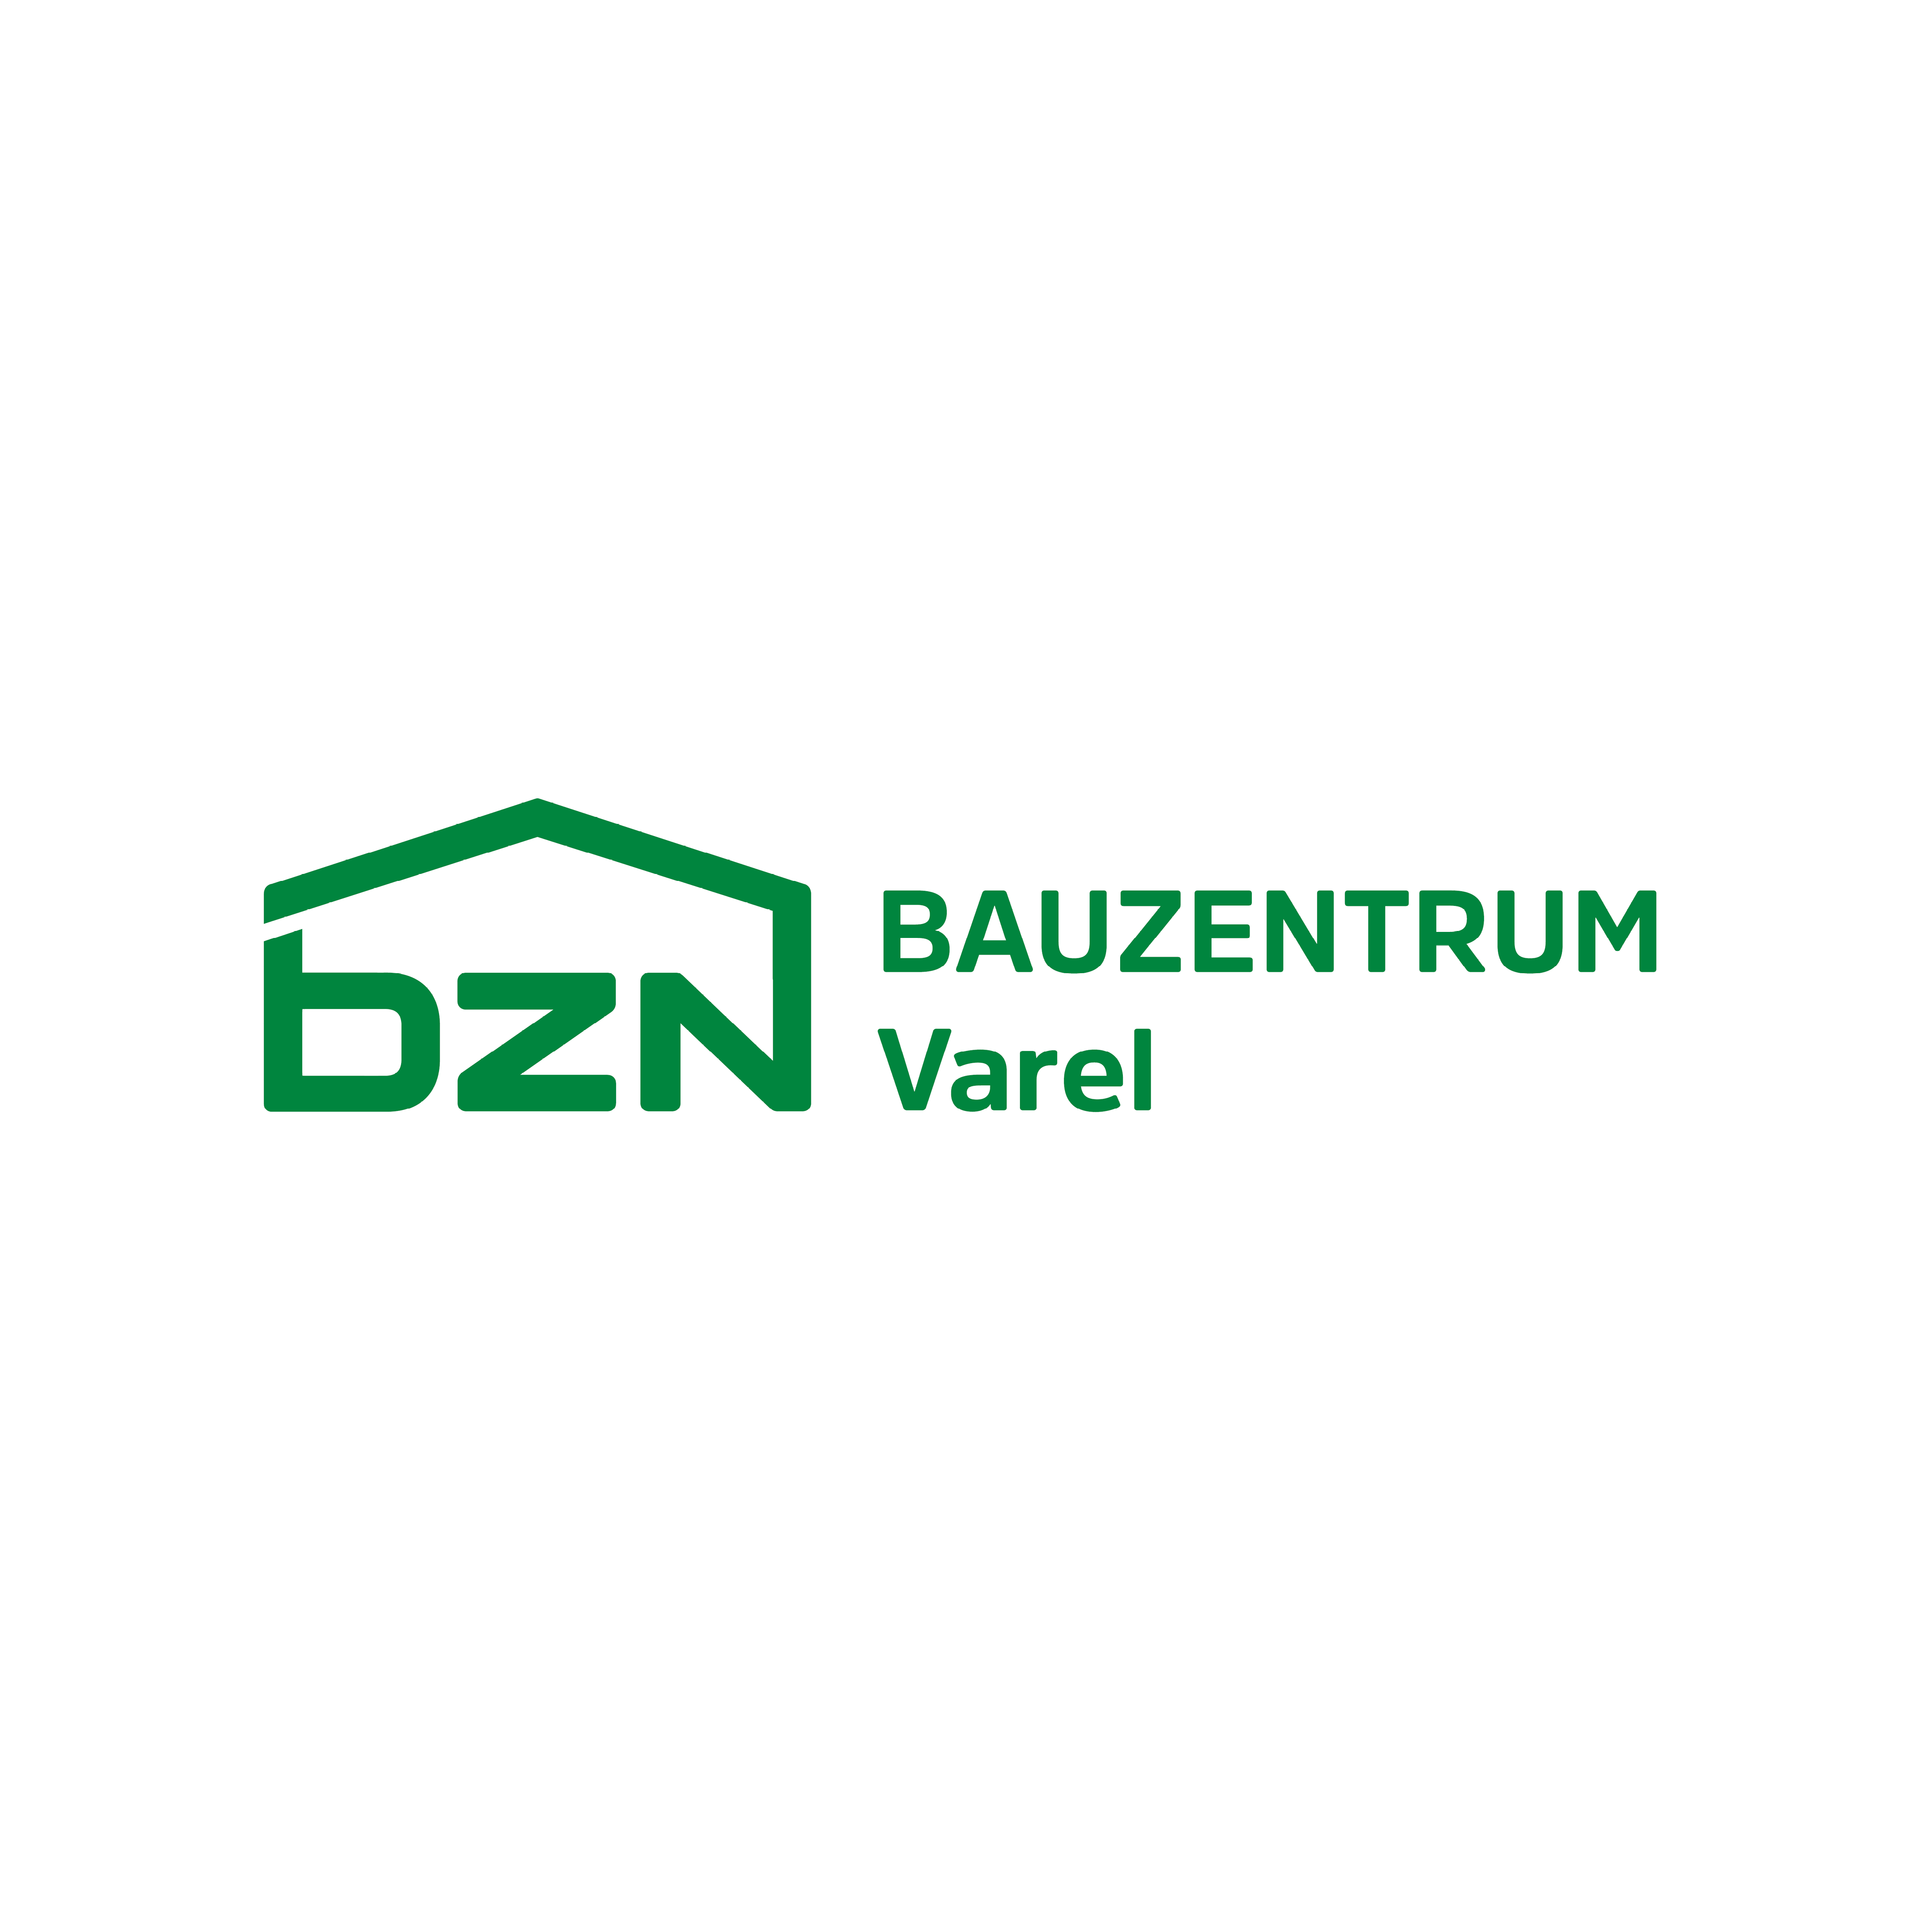 BZN Bauzentrum Varel GmbH & Co. KG in Varel am Jadebusen - Logo